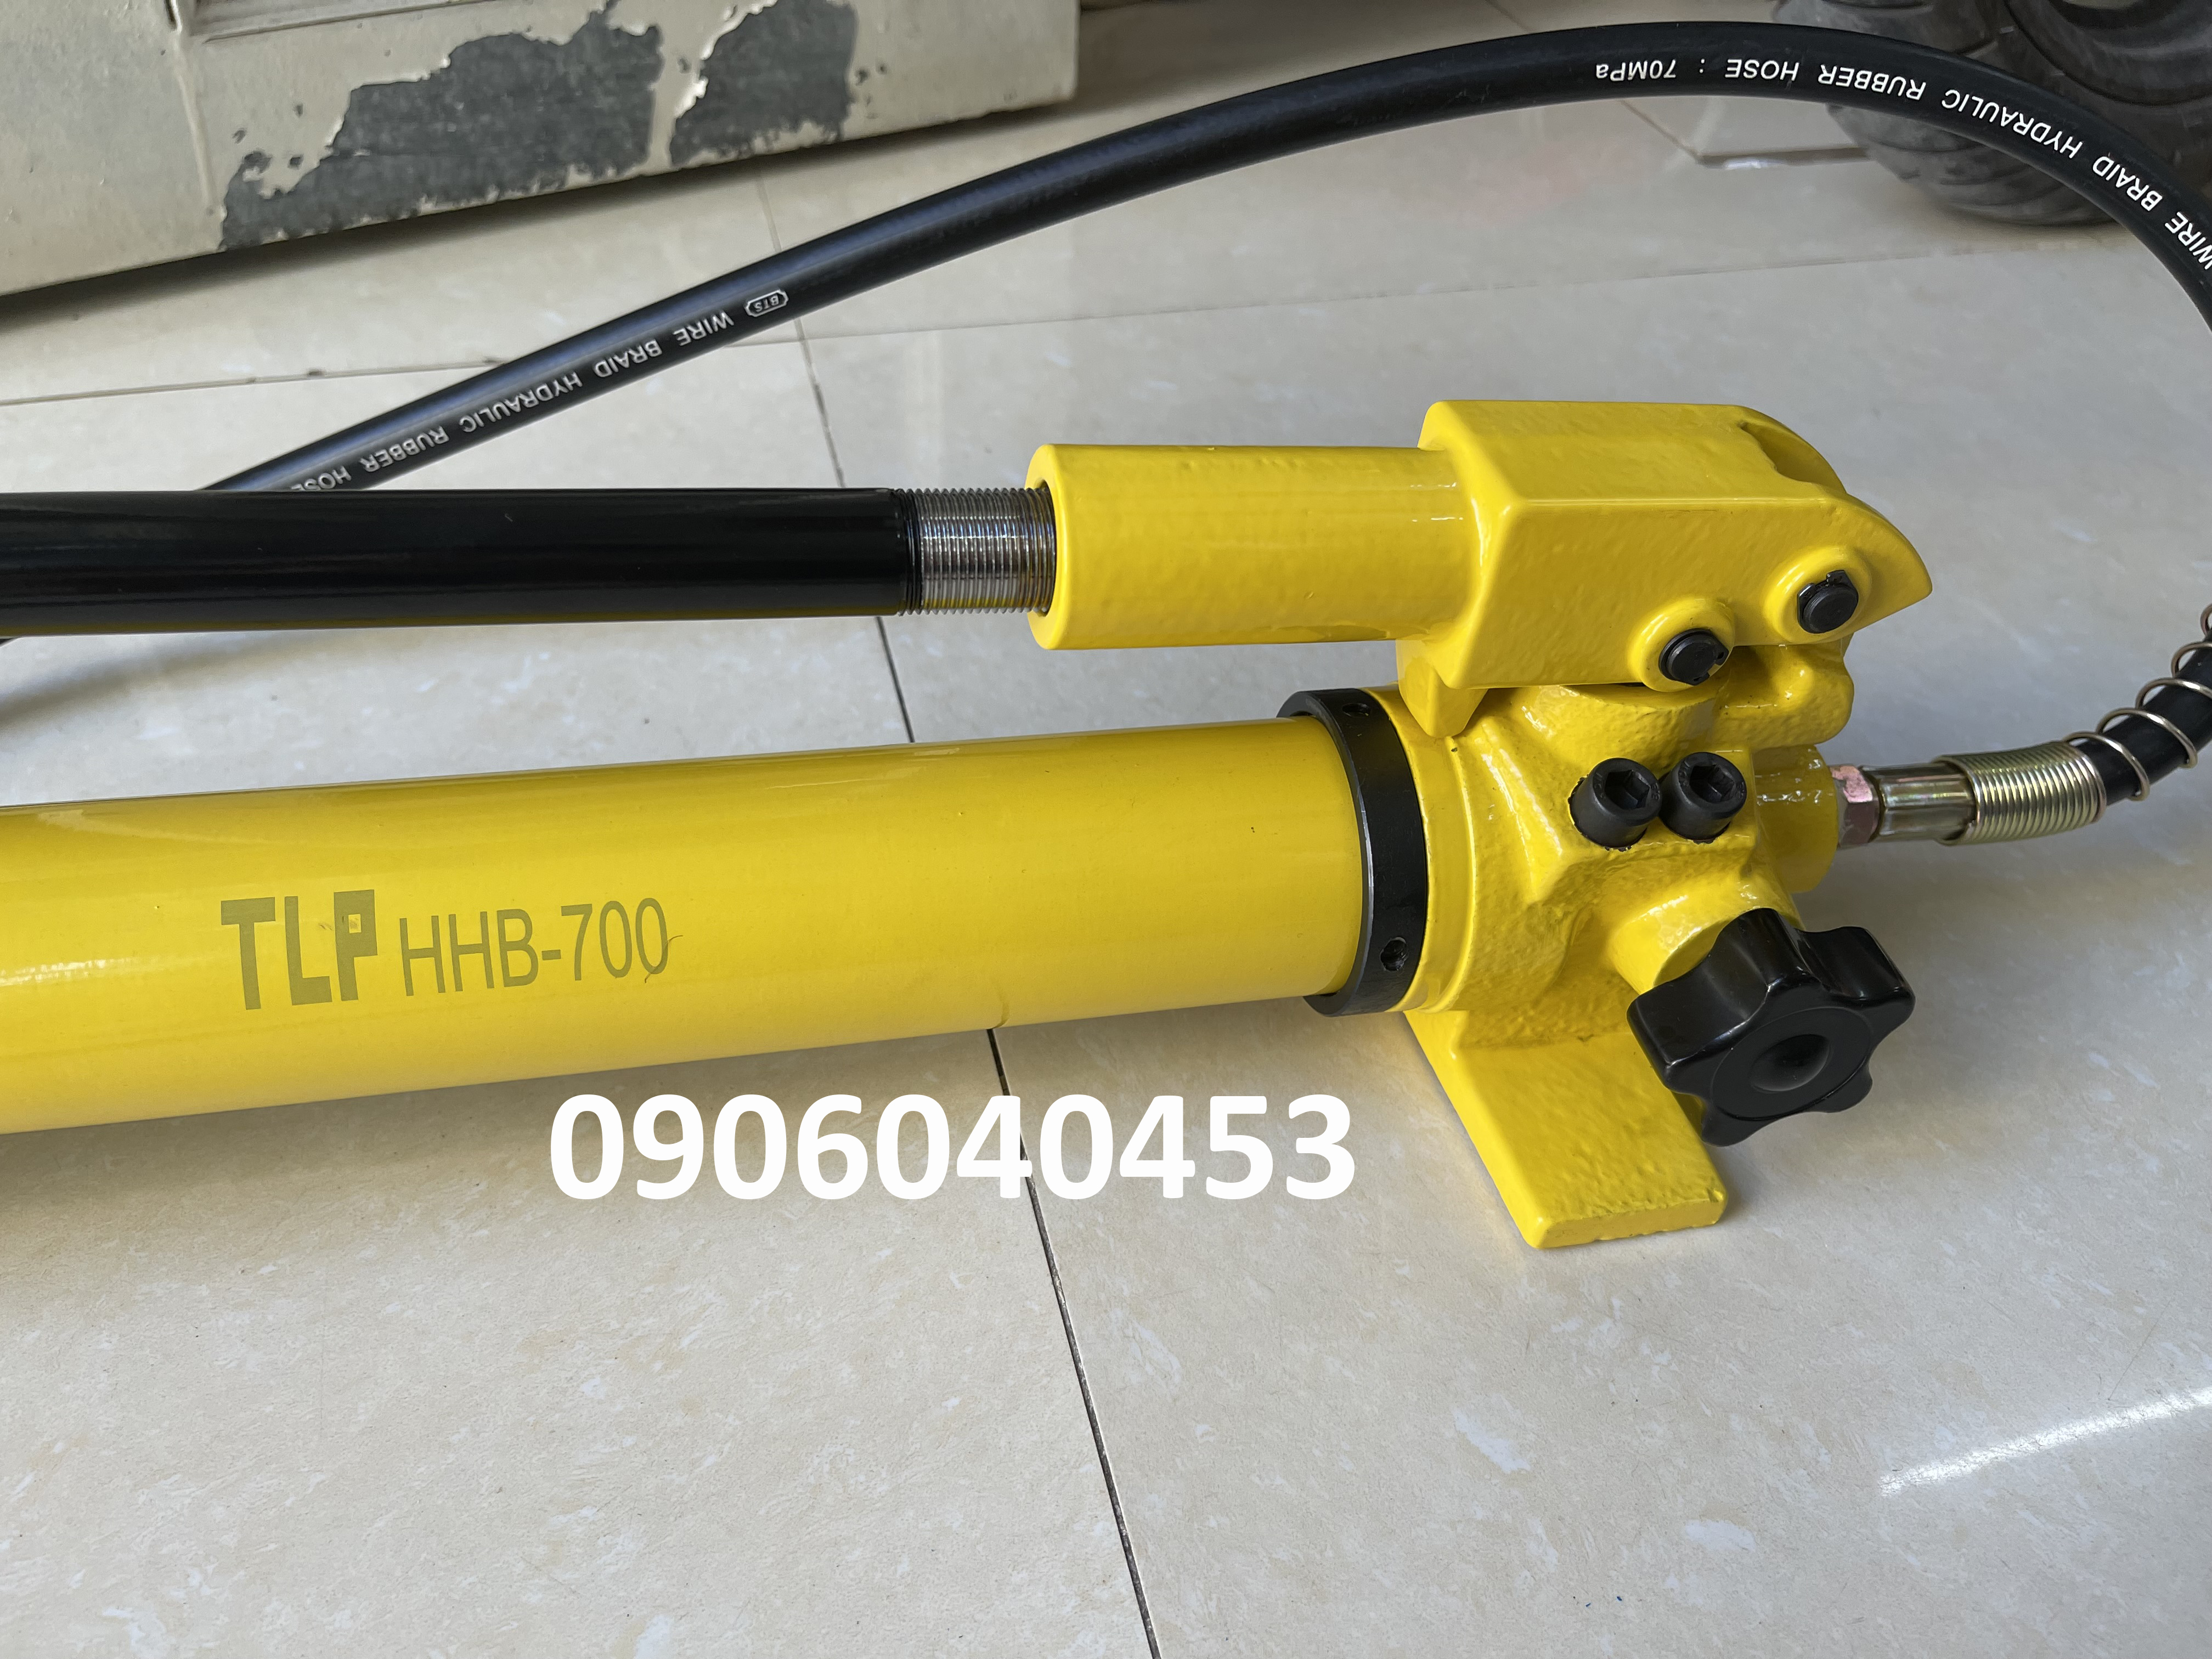 Bơm tay thủy lực TLP HHB-700 / HHB-700 TLP Hyraulic Pumps